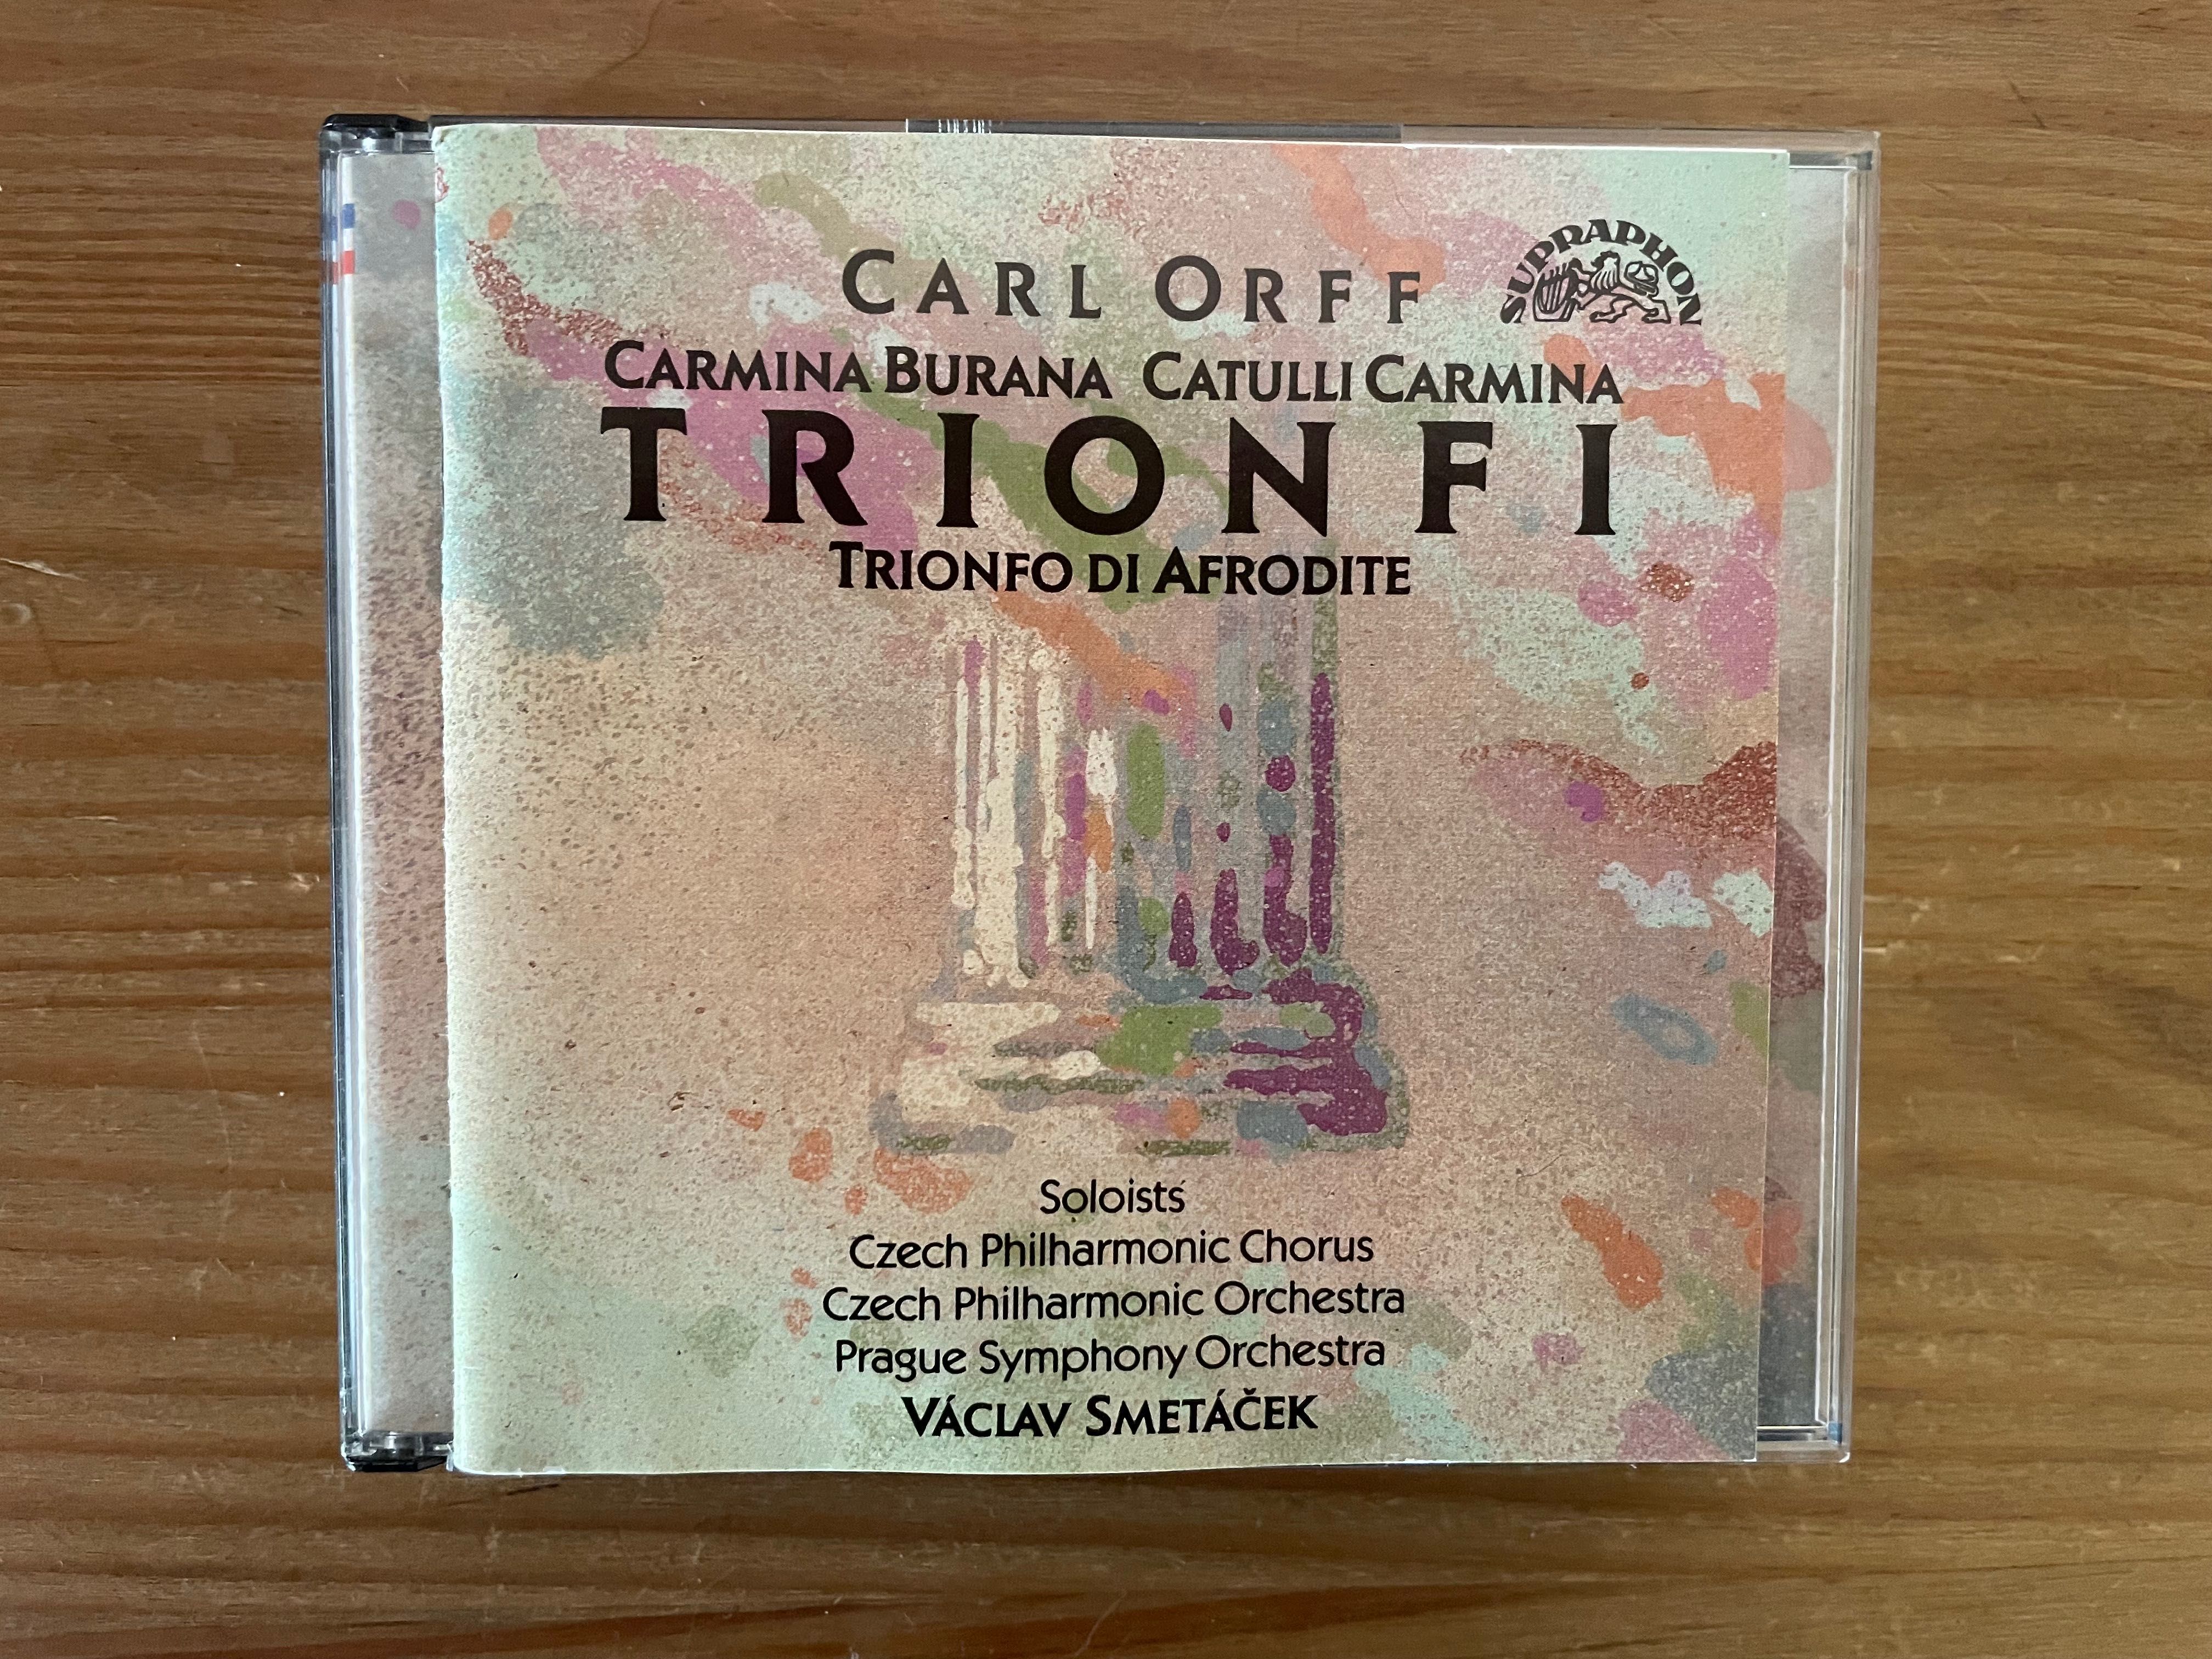 CD Trionfi - Carl Orff (portes grátis)